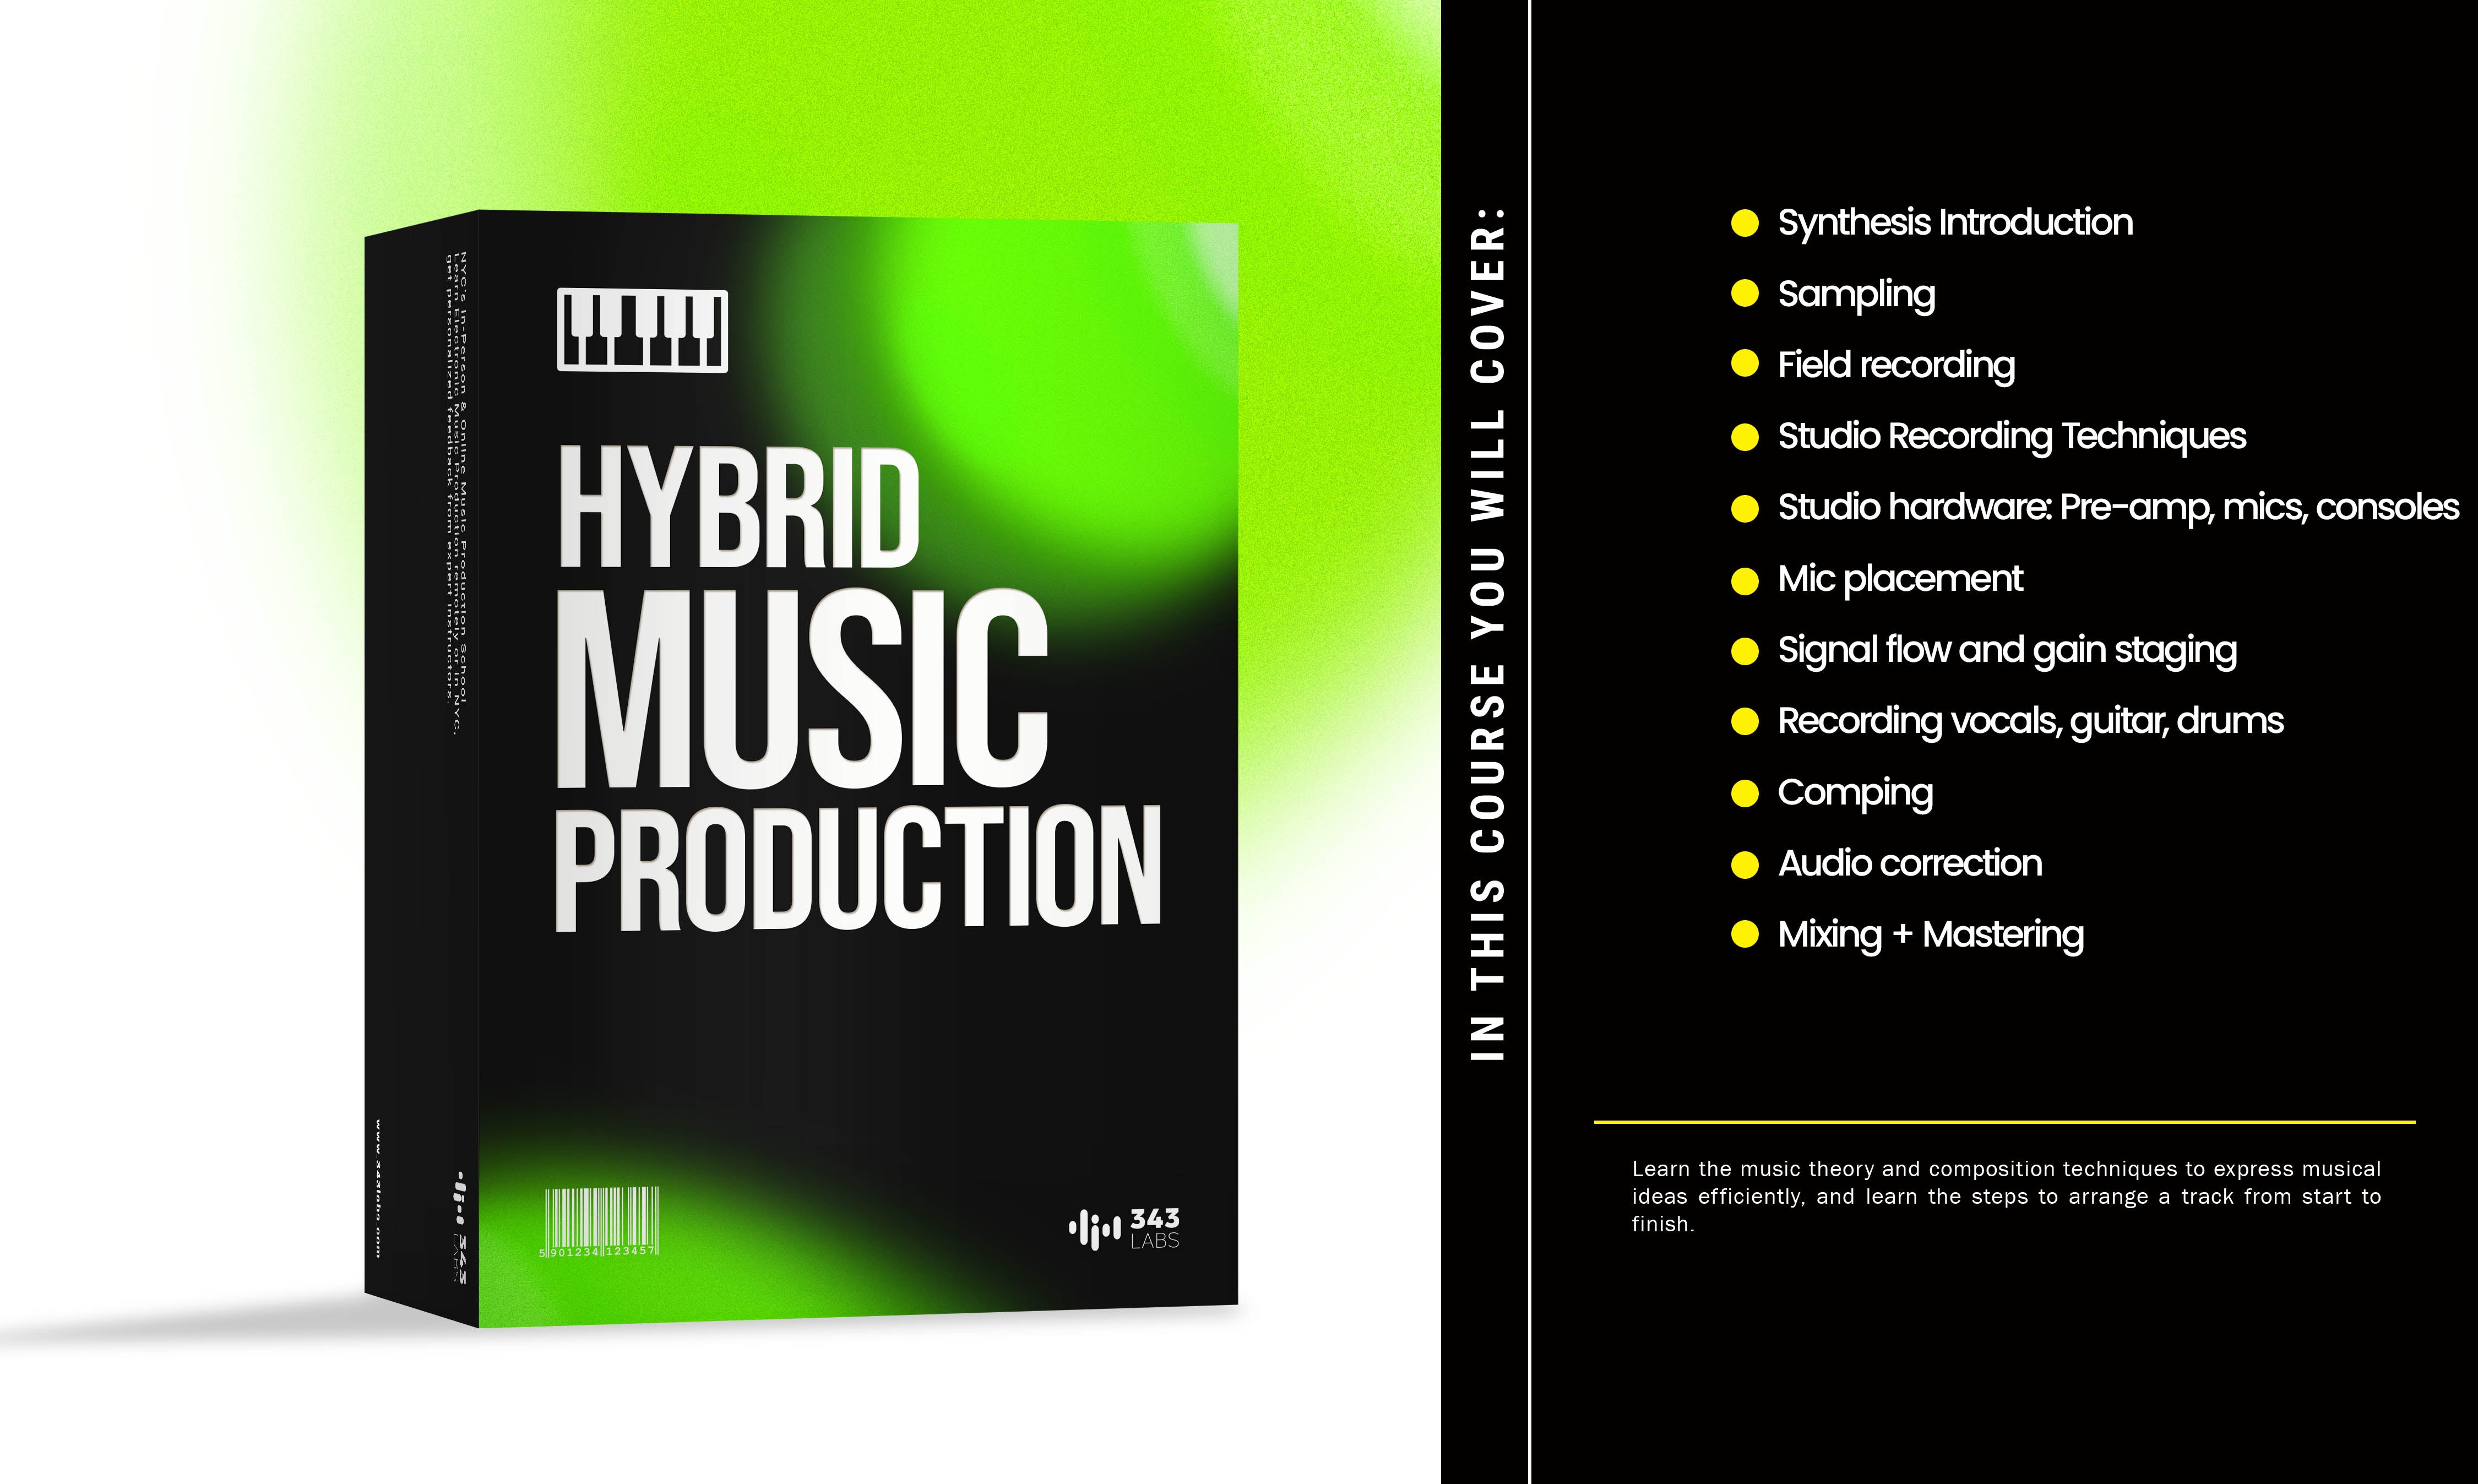 Hybrid Music Production [NYC]